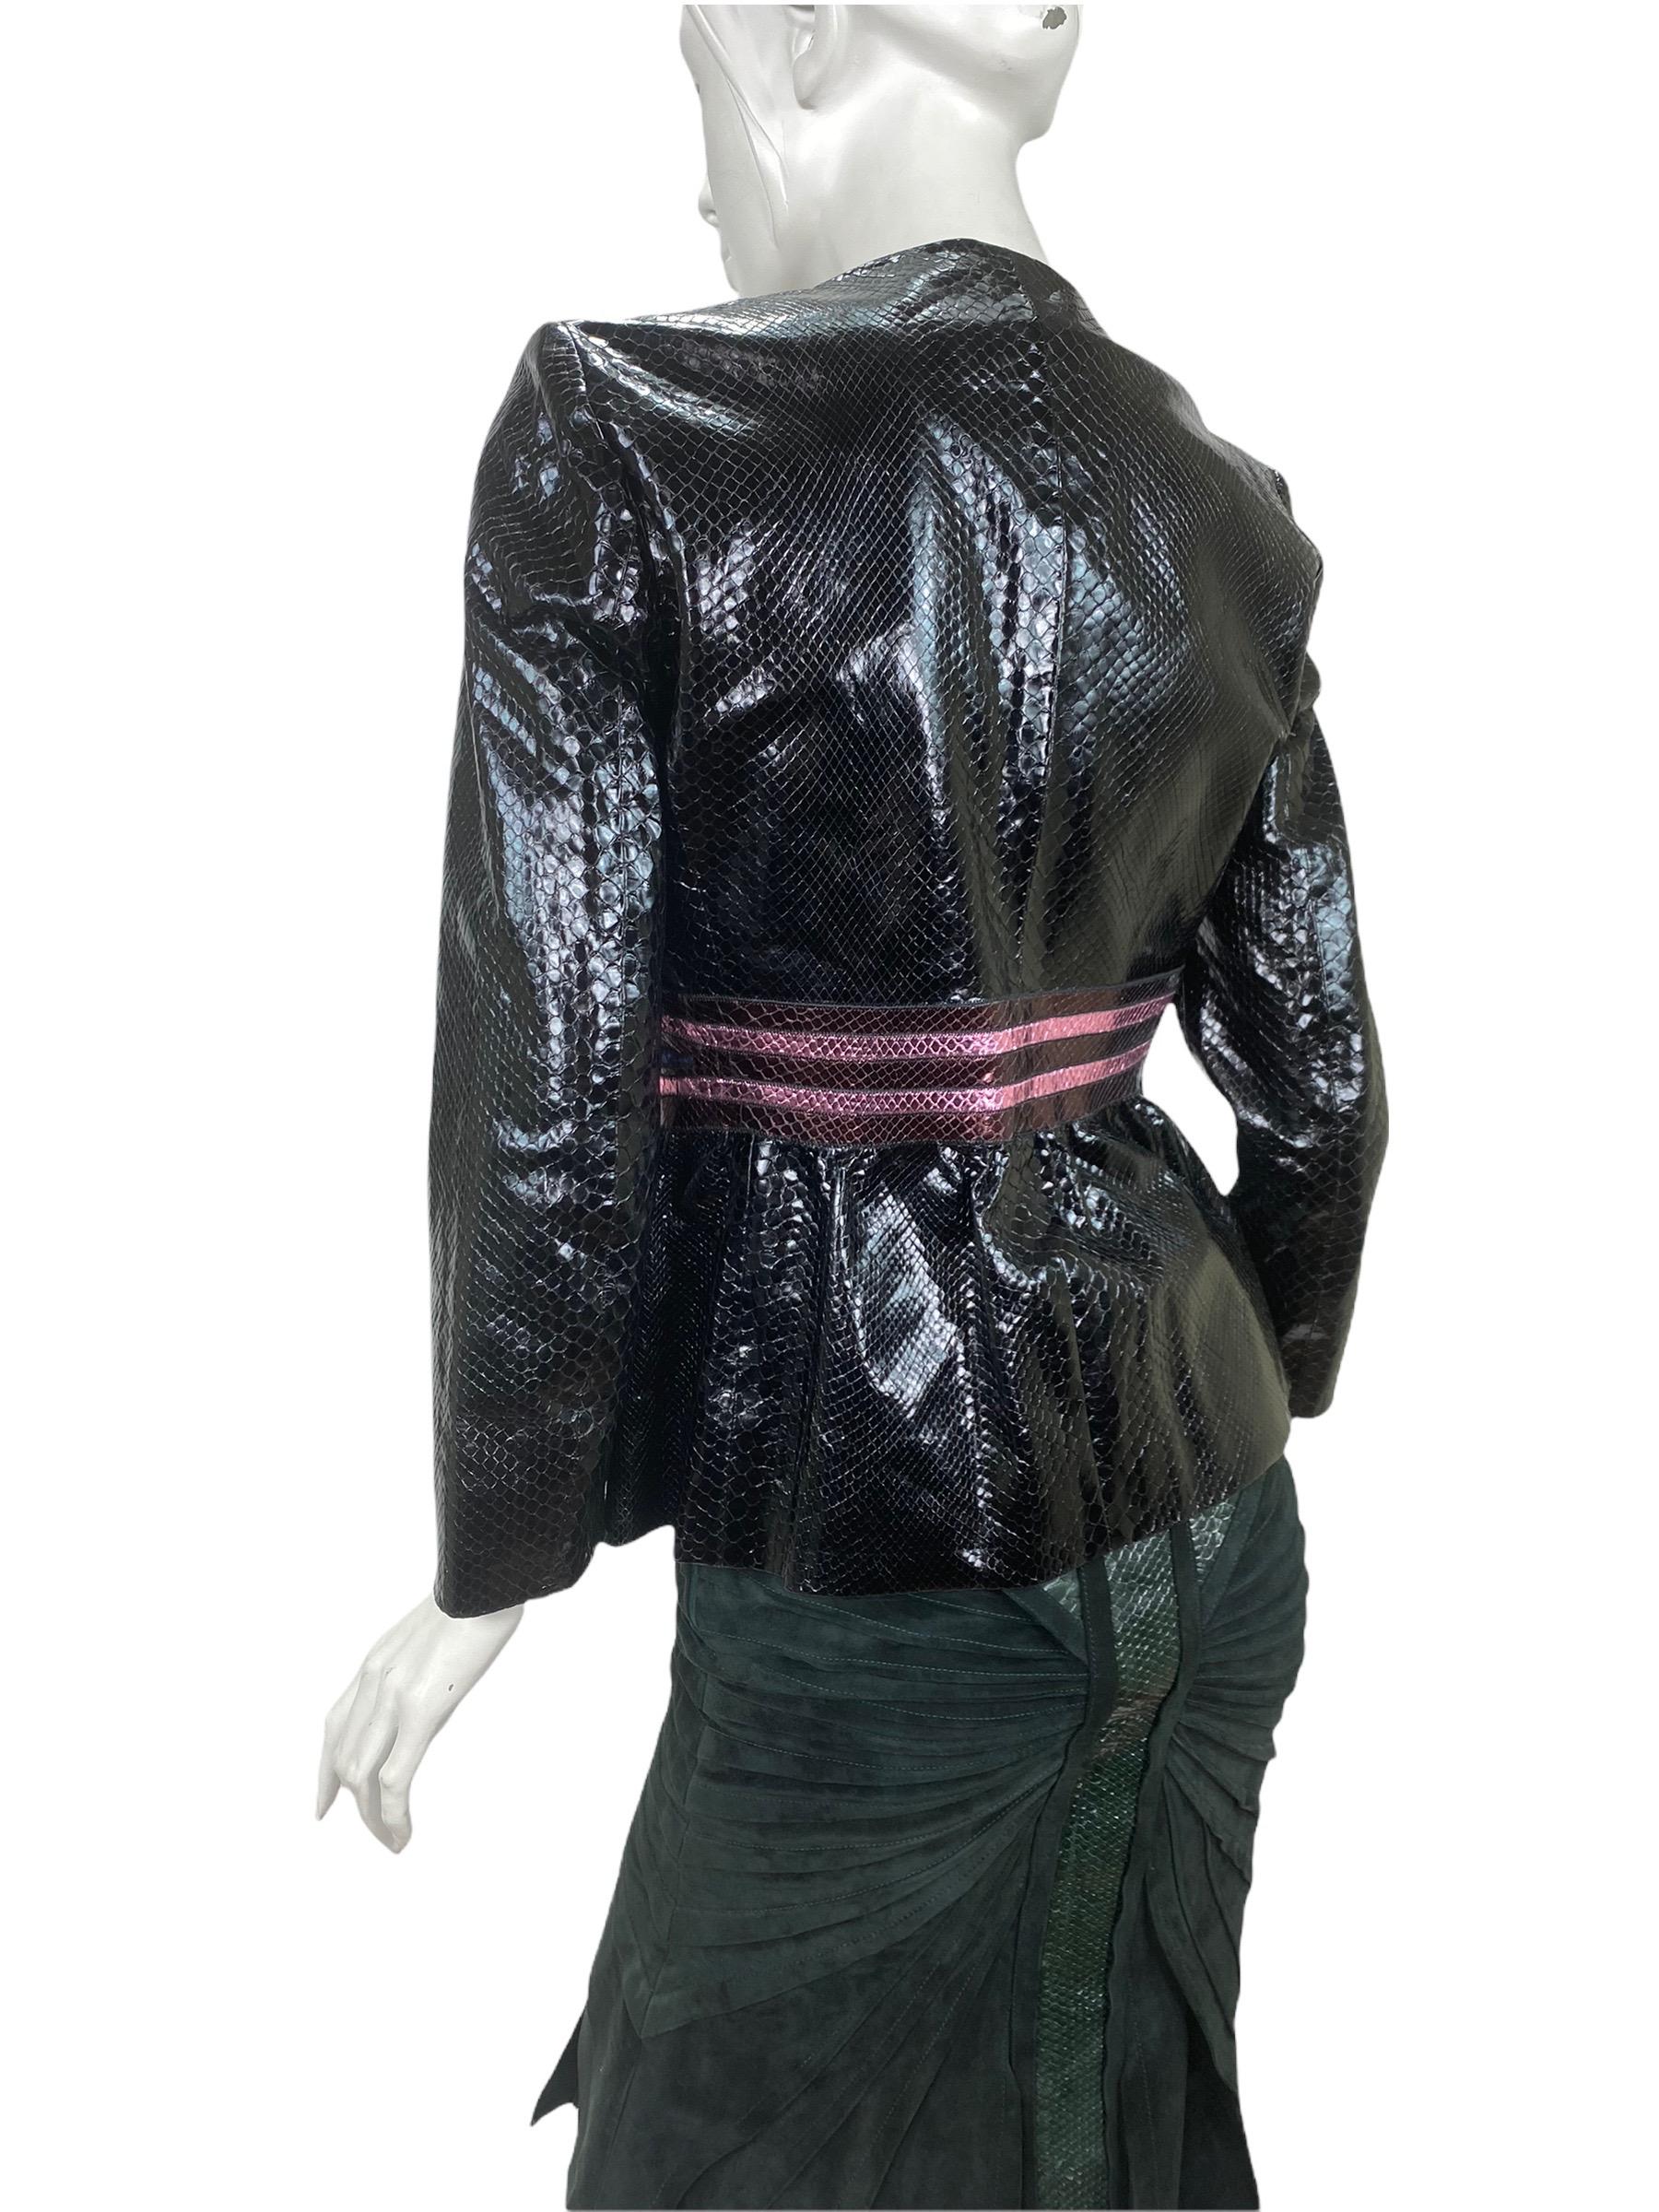 Women's S/S 2007 Vintage Gucci Black Python Leather Jacket For Sale